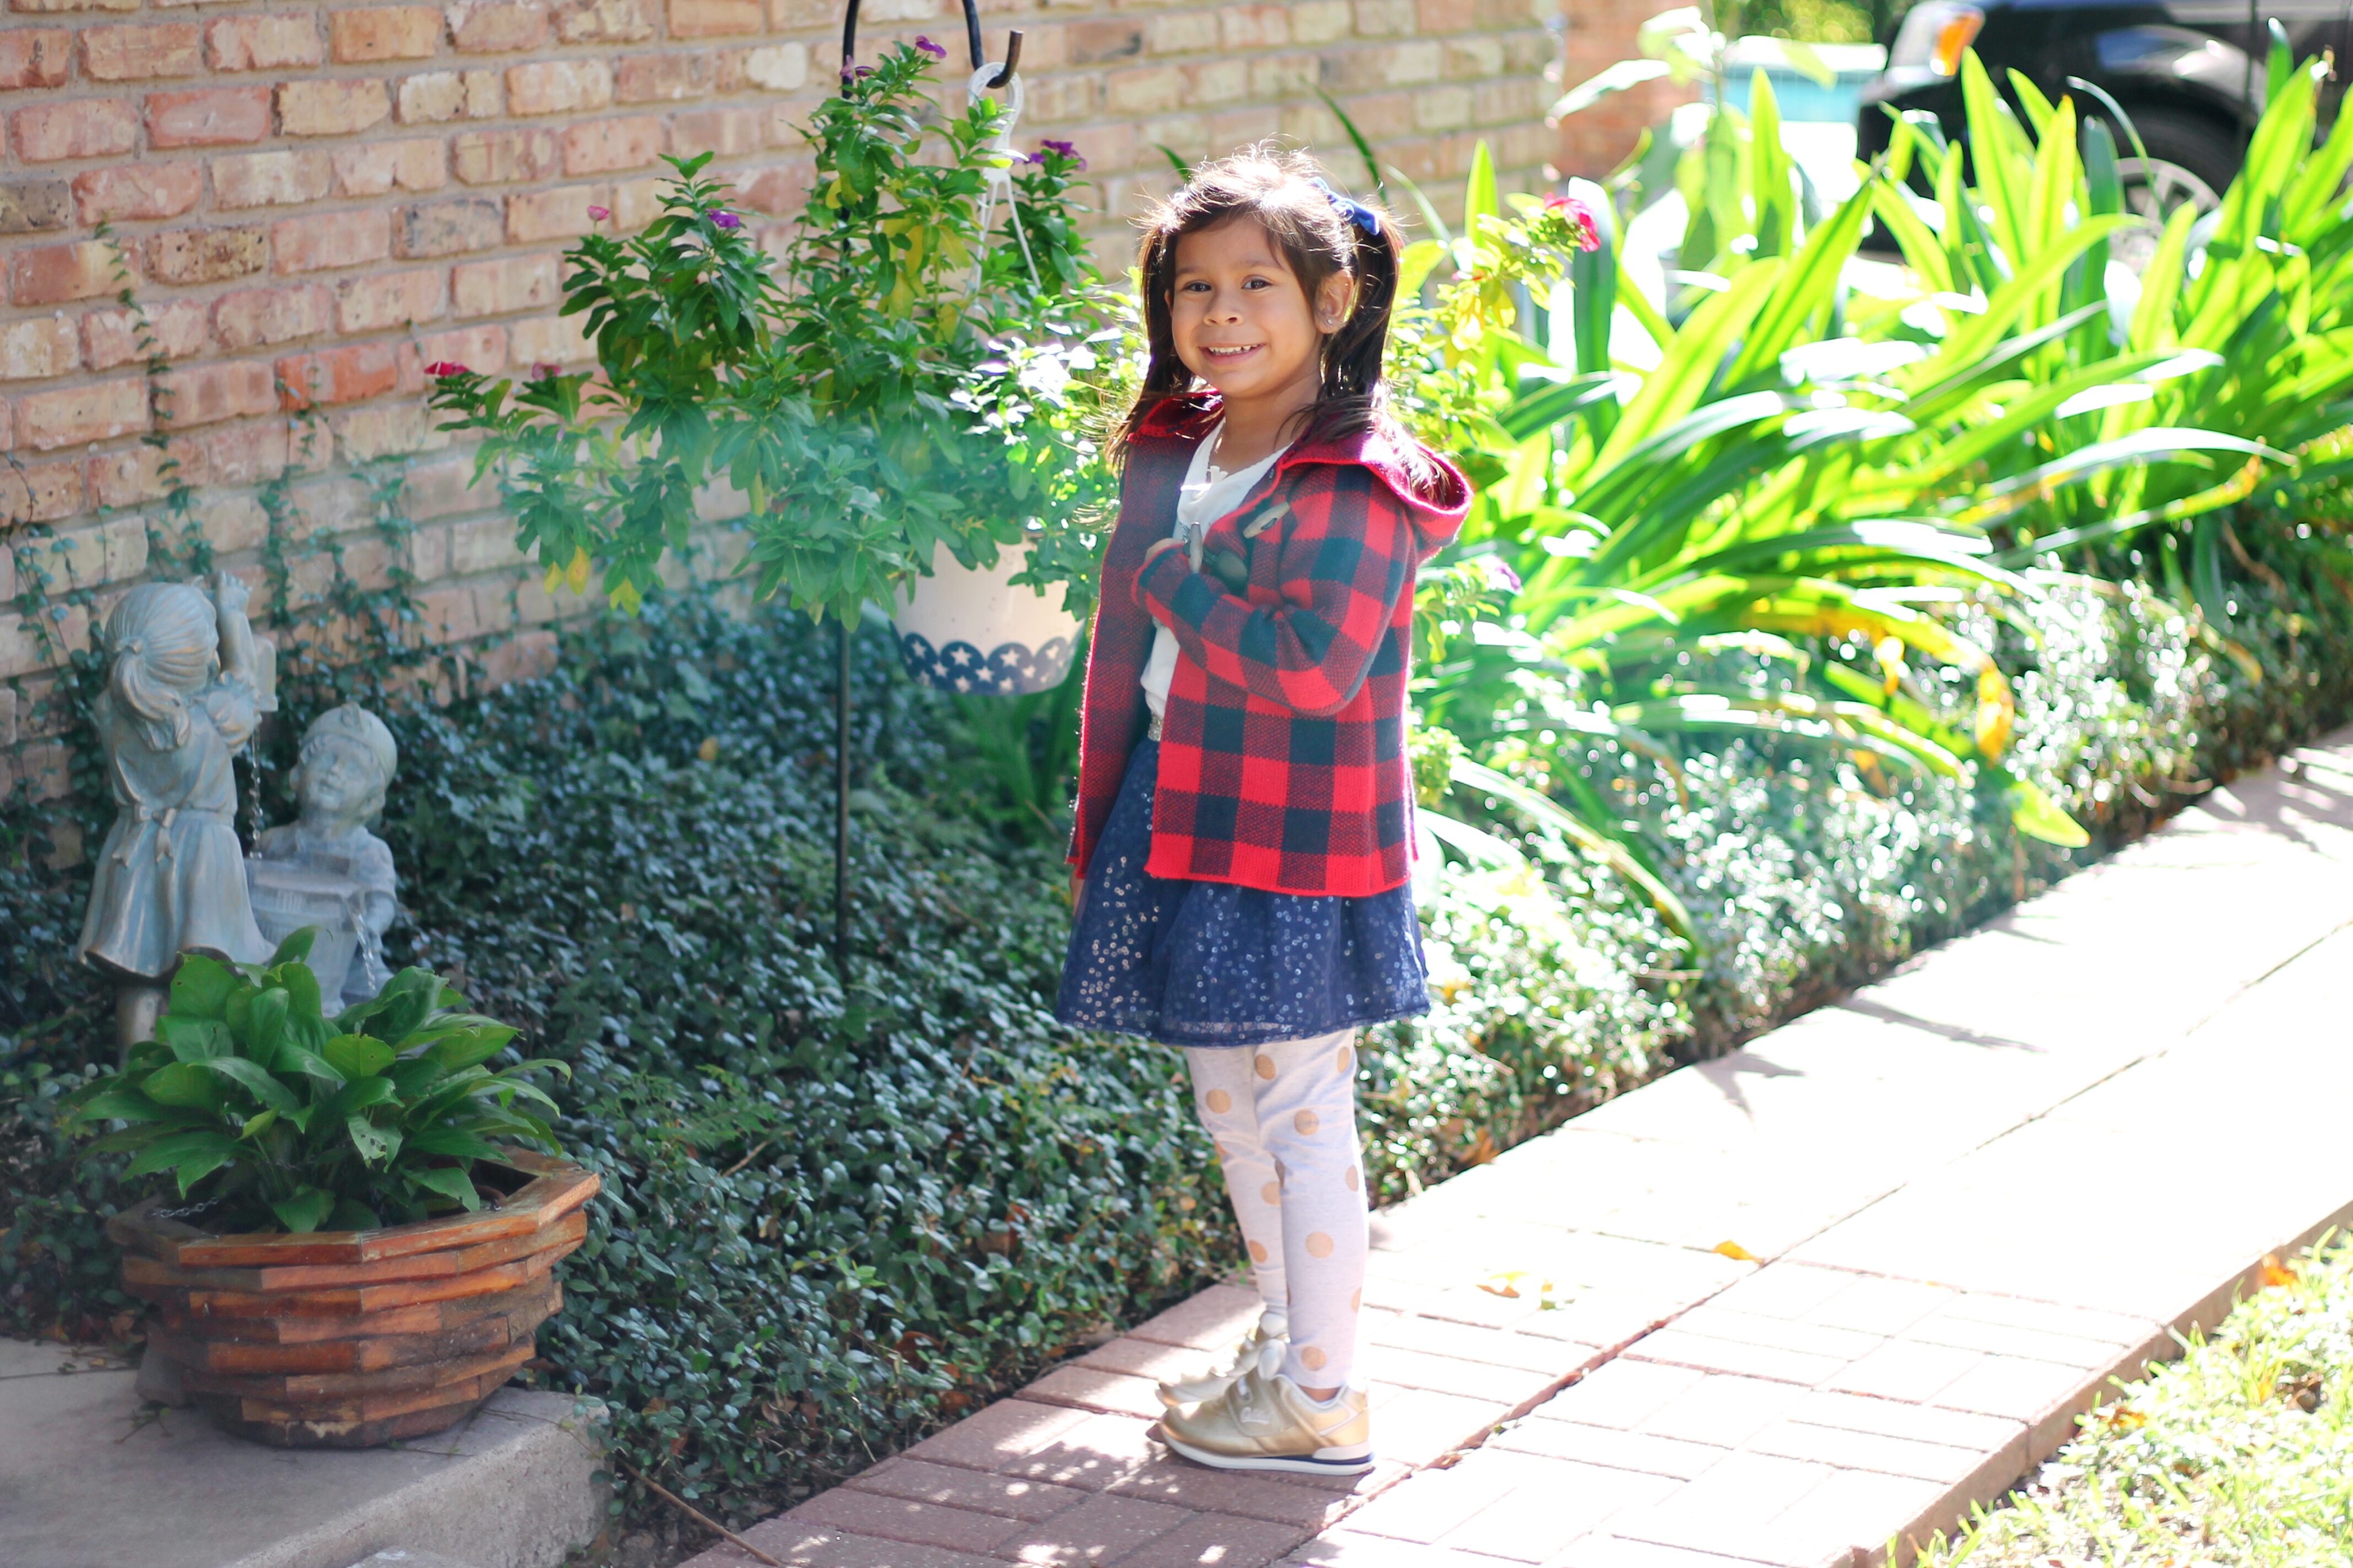 OshKosh B'Gosh best holiday outfits. Little girl fashion at its best!